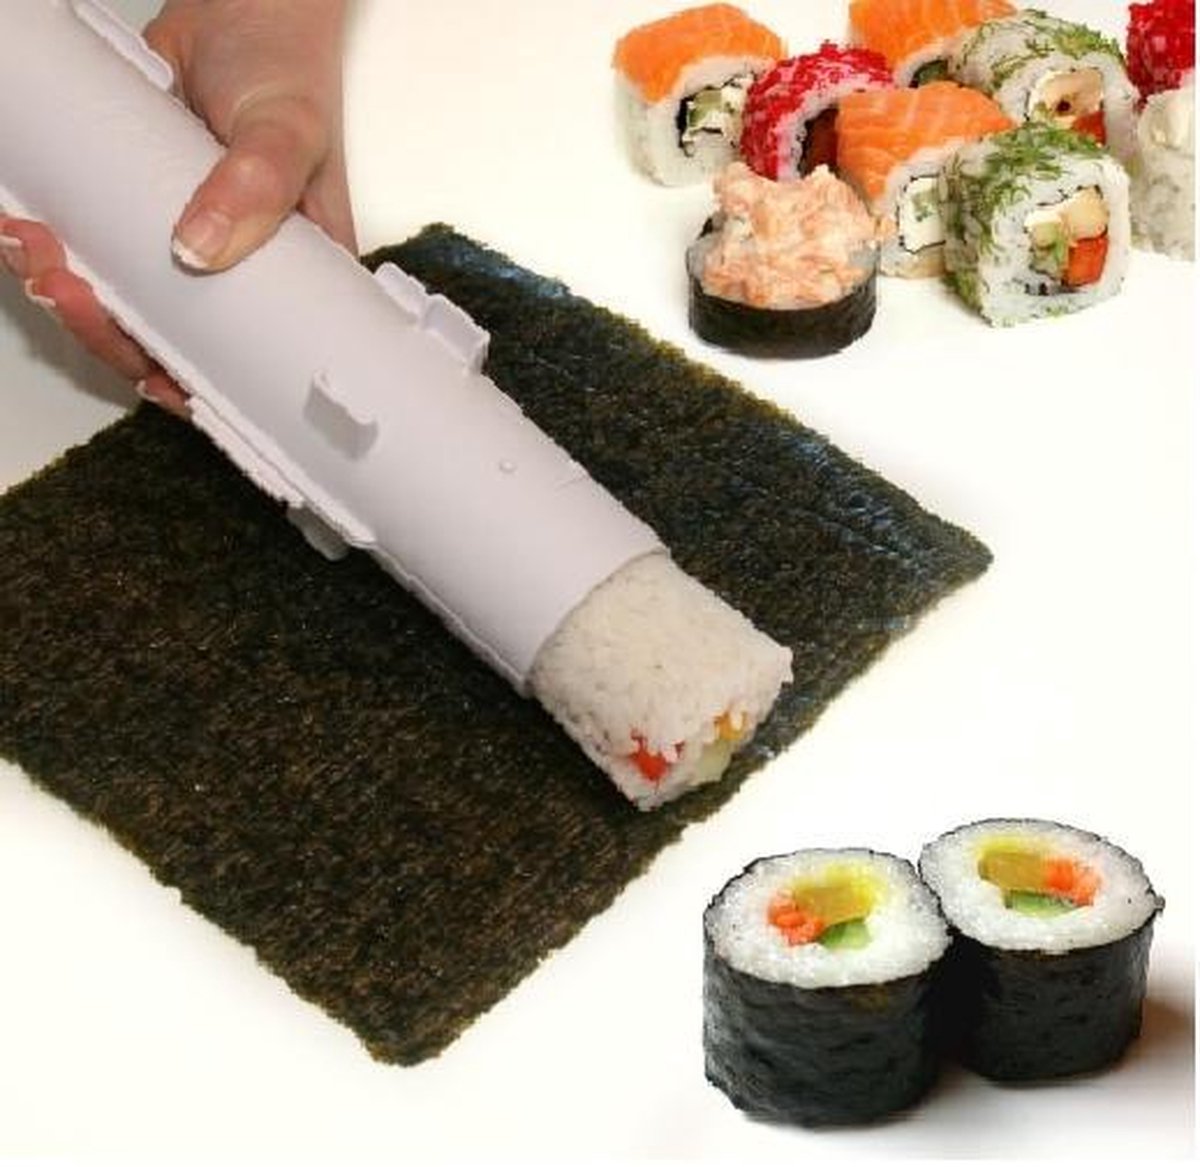 Půlkruh bestie Archeologie sushi machine kopen Iniciativa cena partner